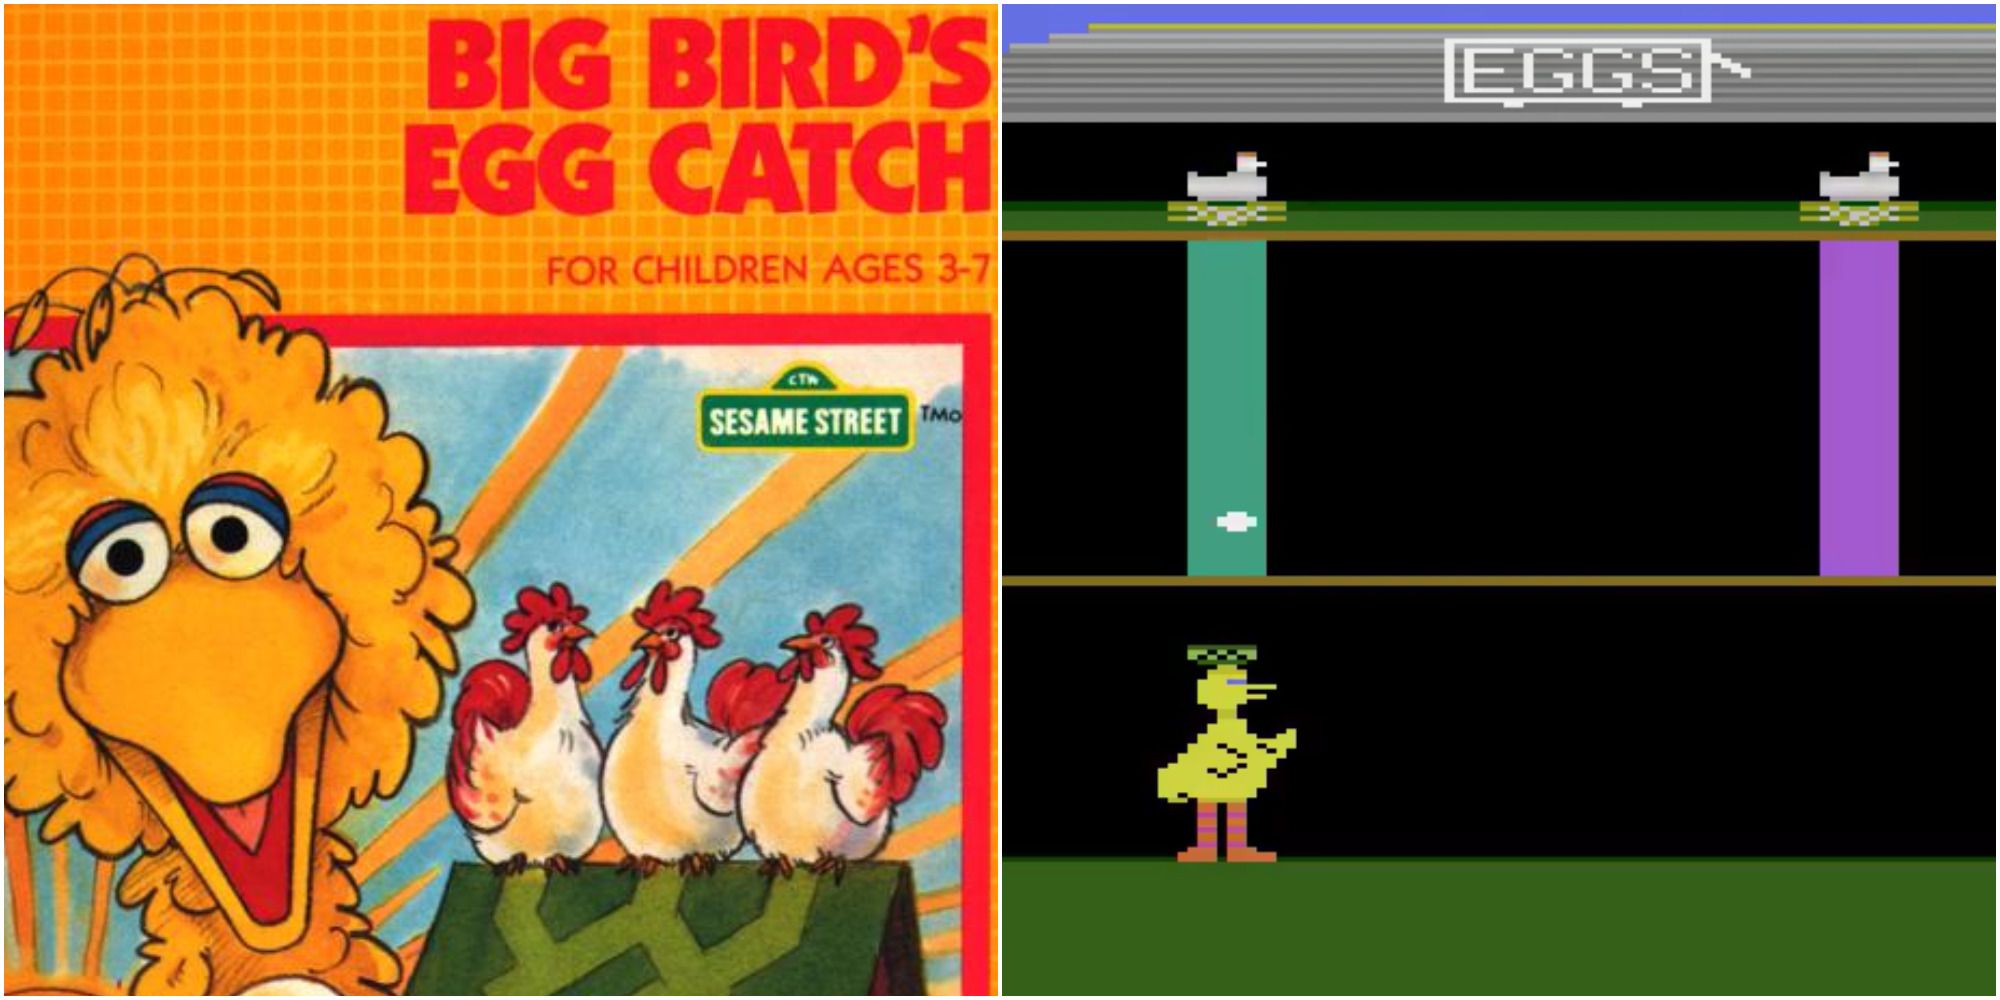 big birds egg catch cover & gameplay